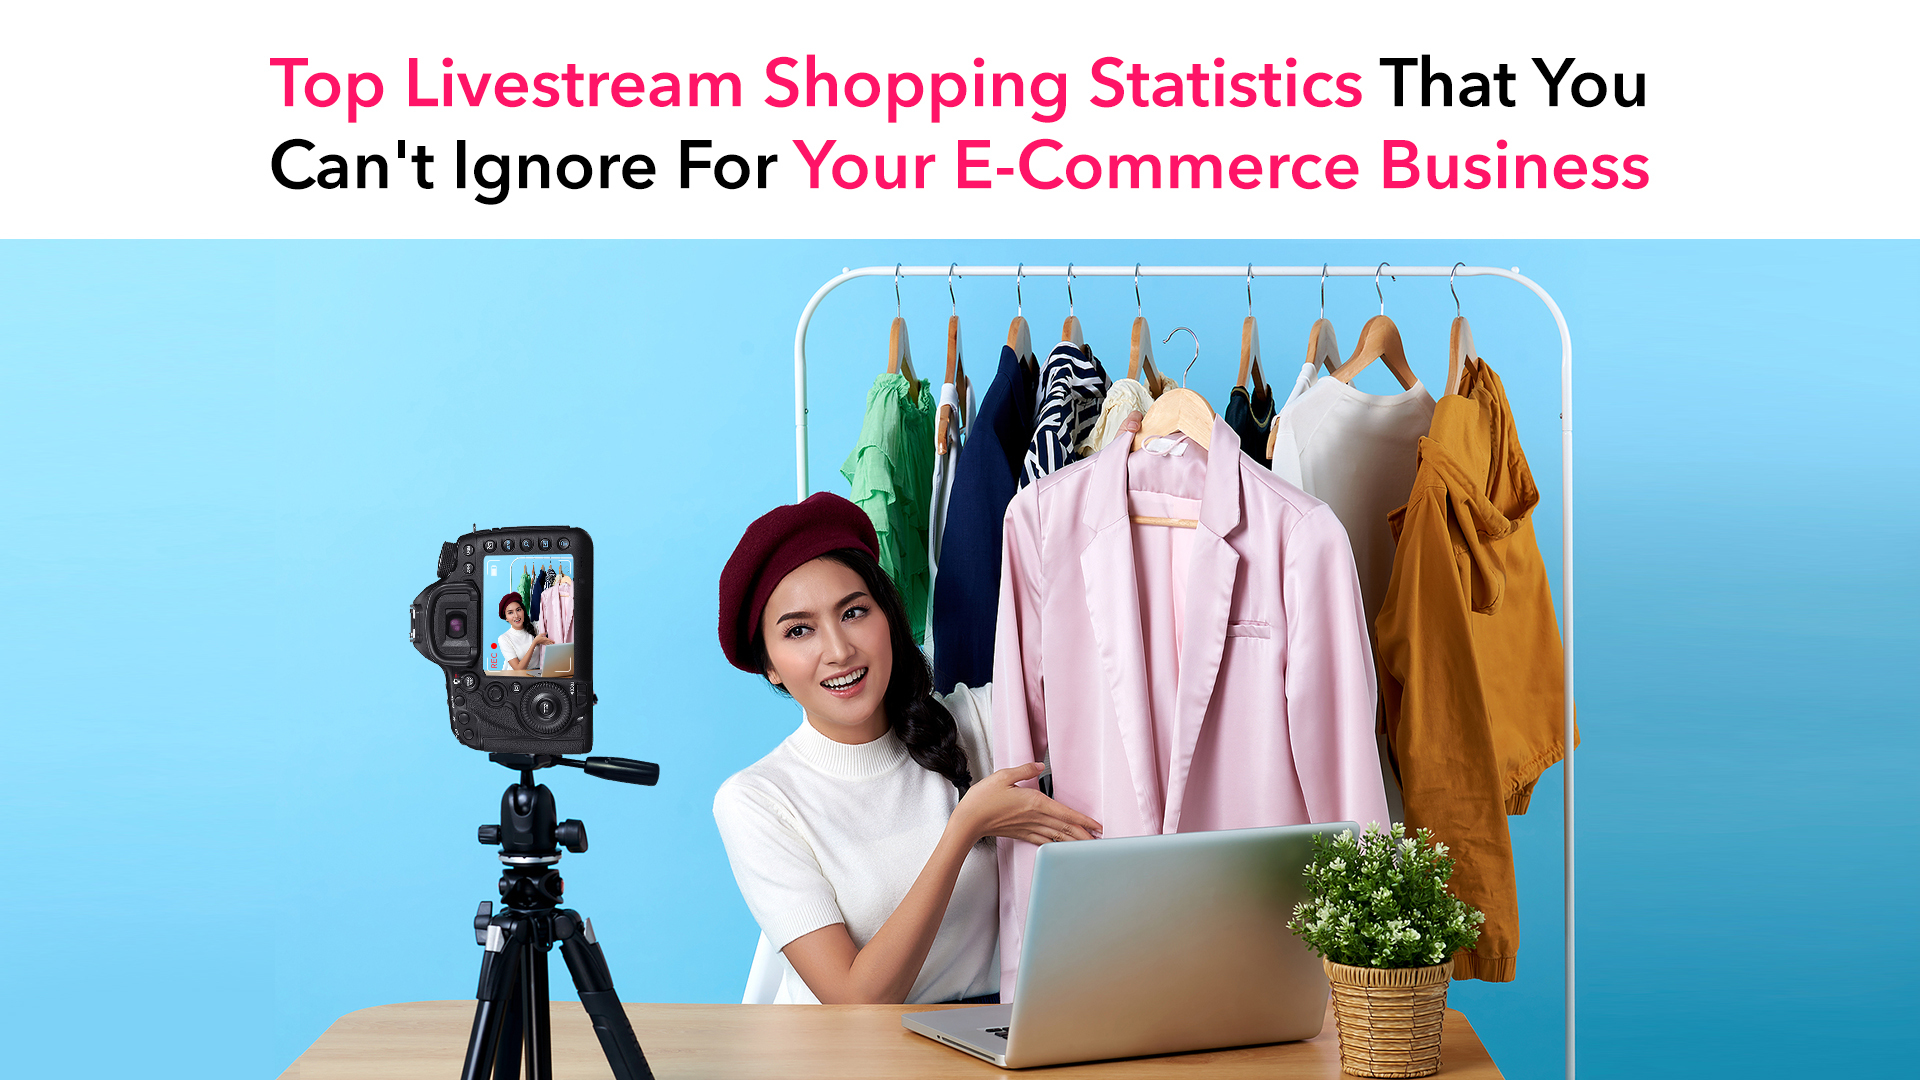 The Top Livestream Shopping Statistics For E-Commerce Business